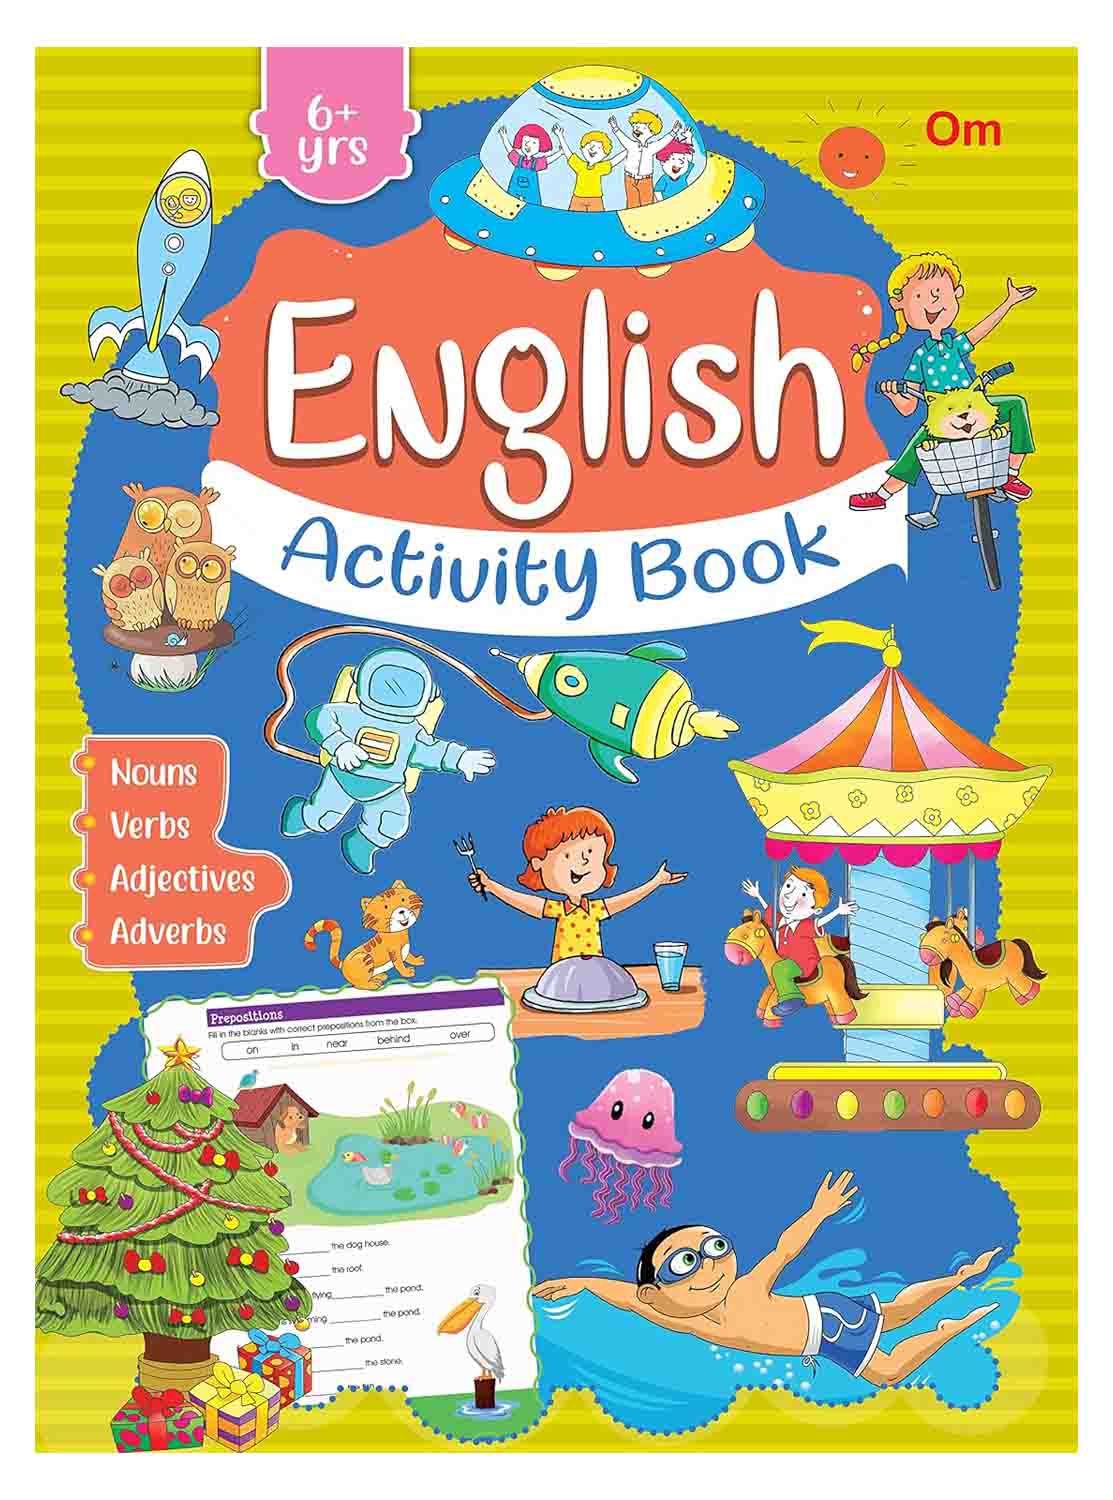 Om Books International English Activity Book - 9789352760381